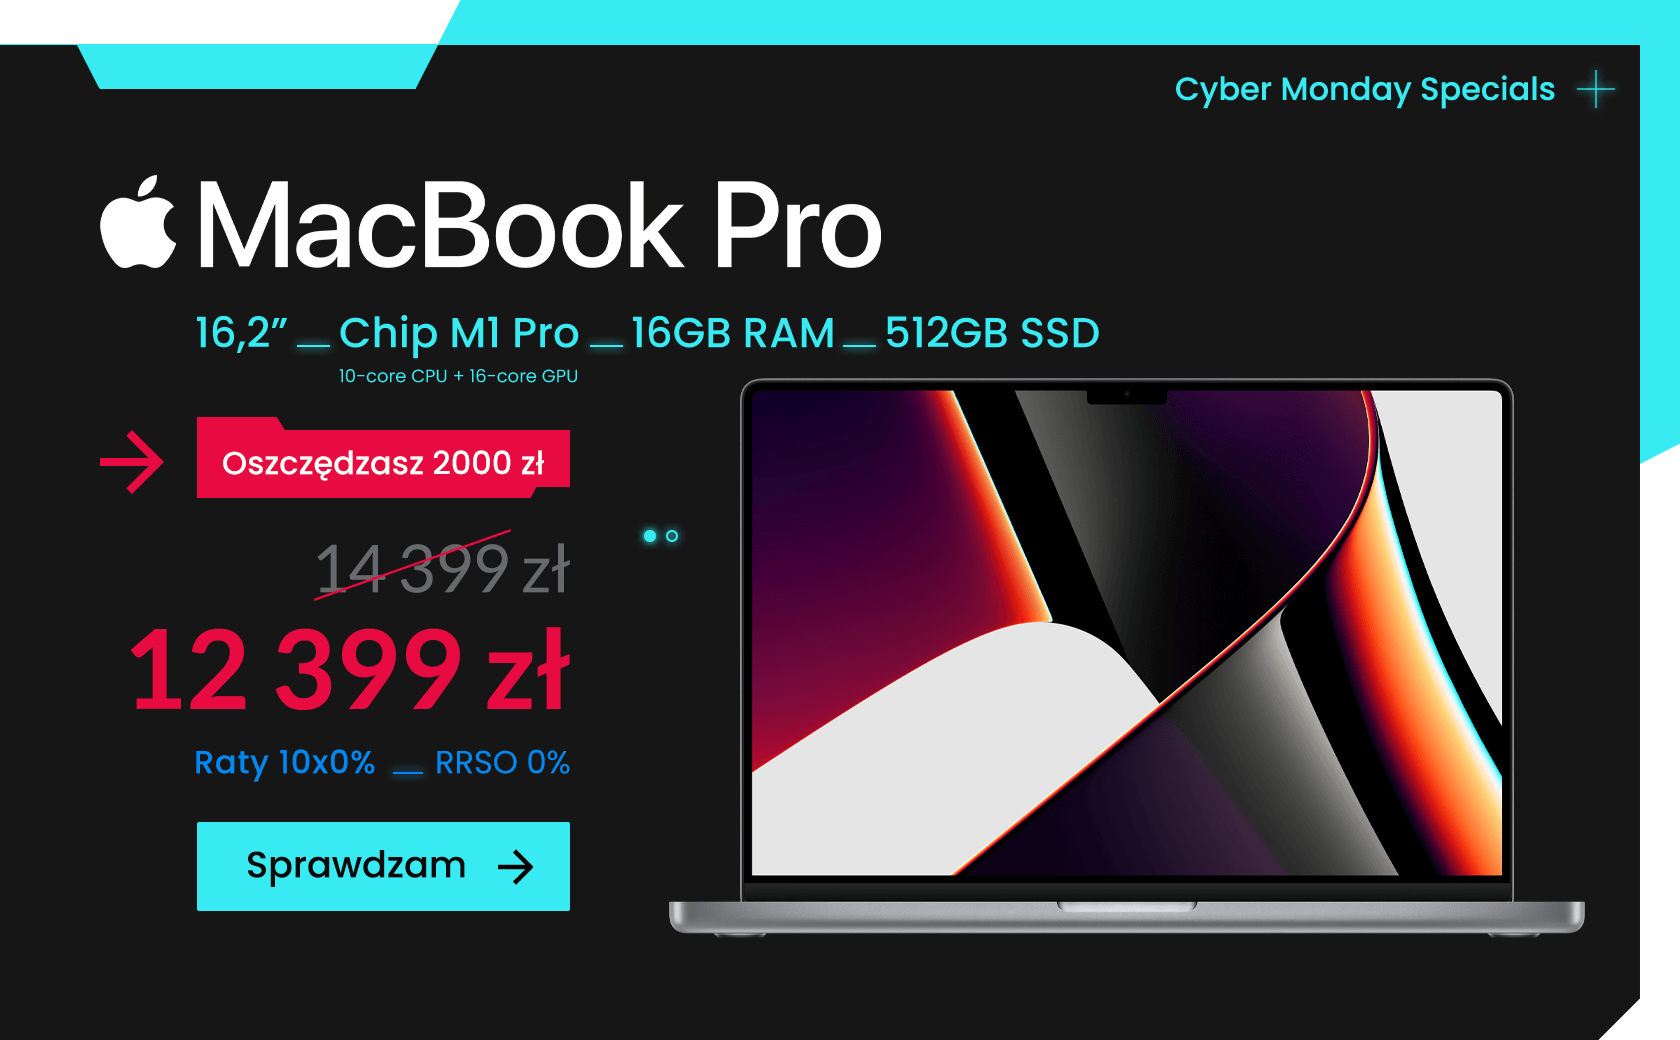 Cyber Monday Specials - MacBook Pro 16